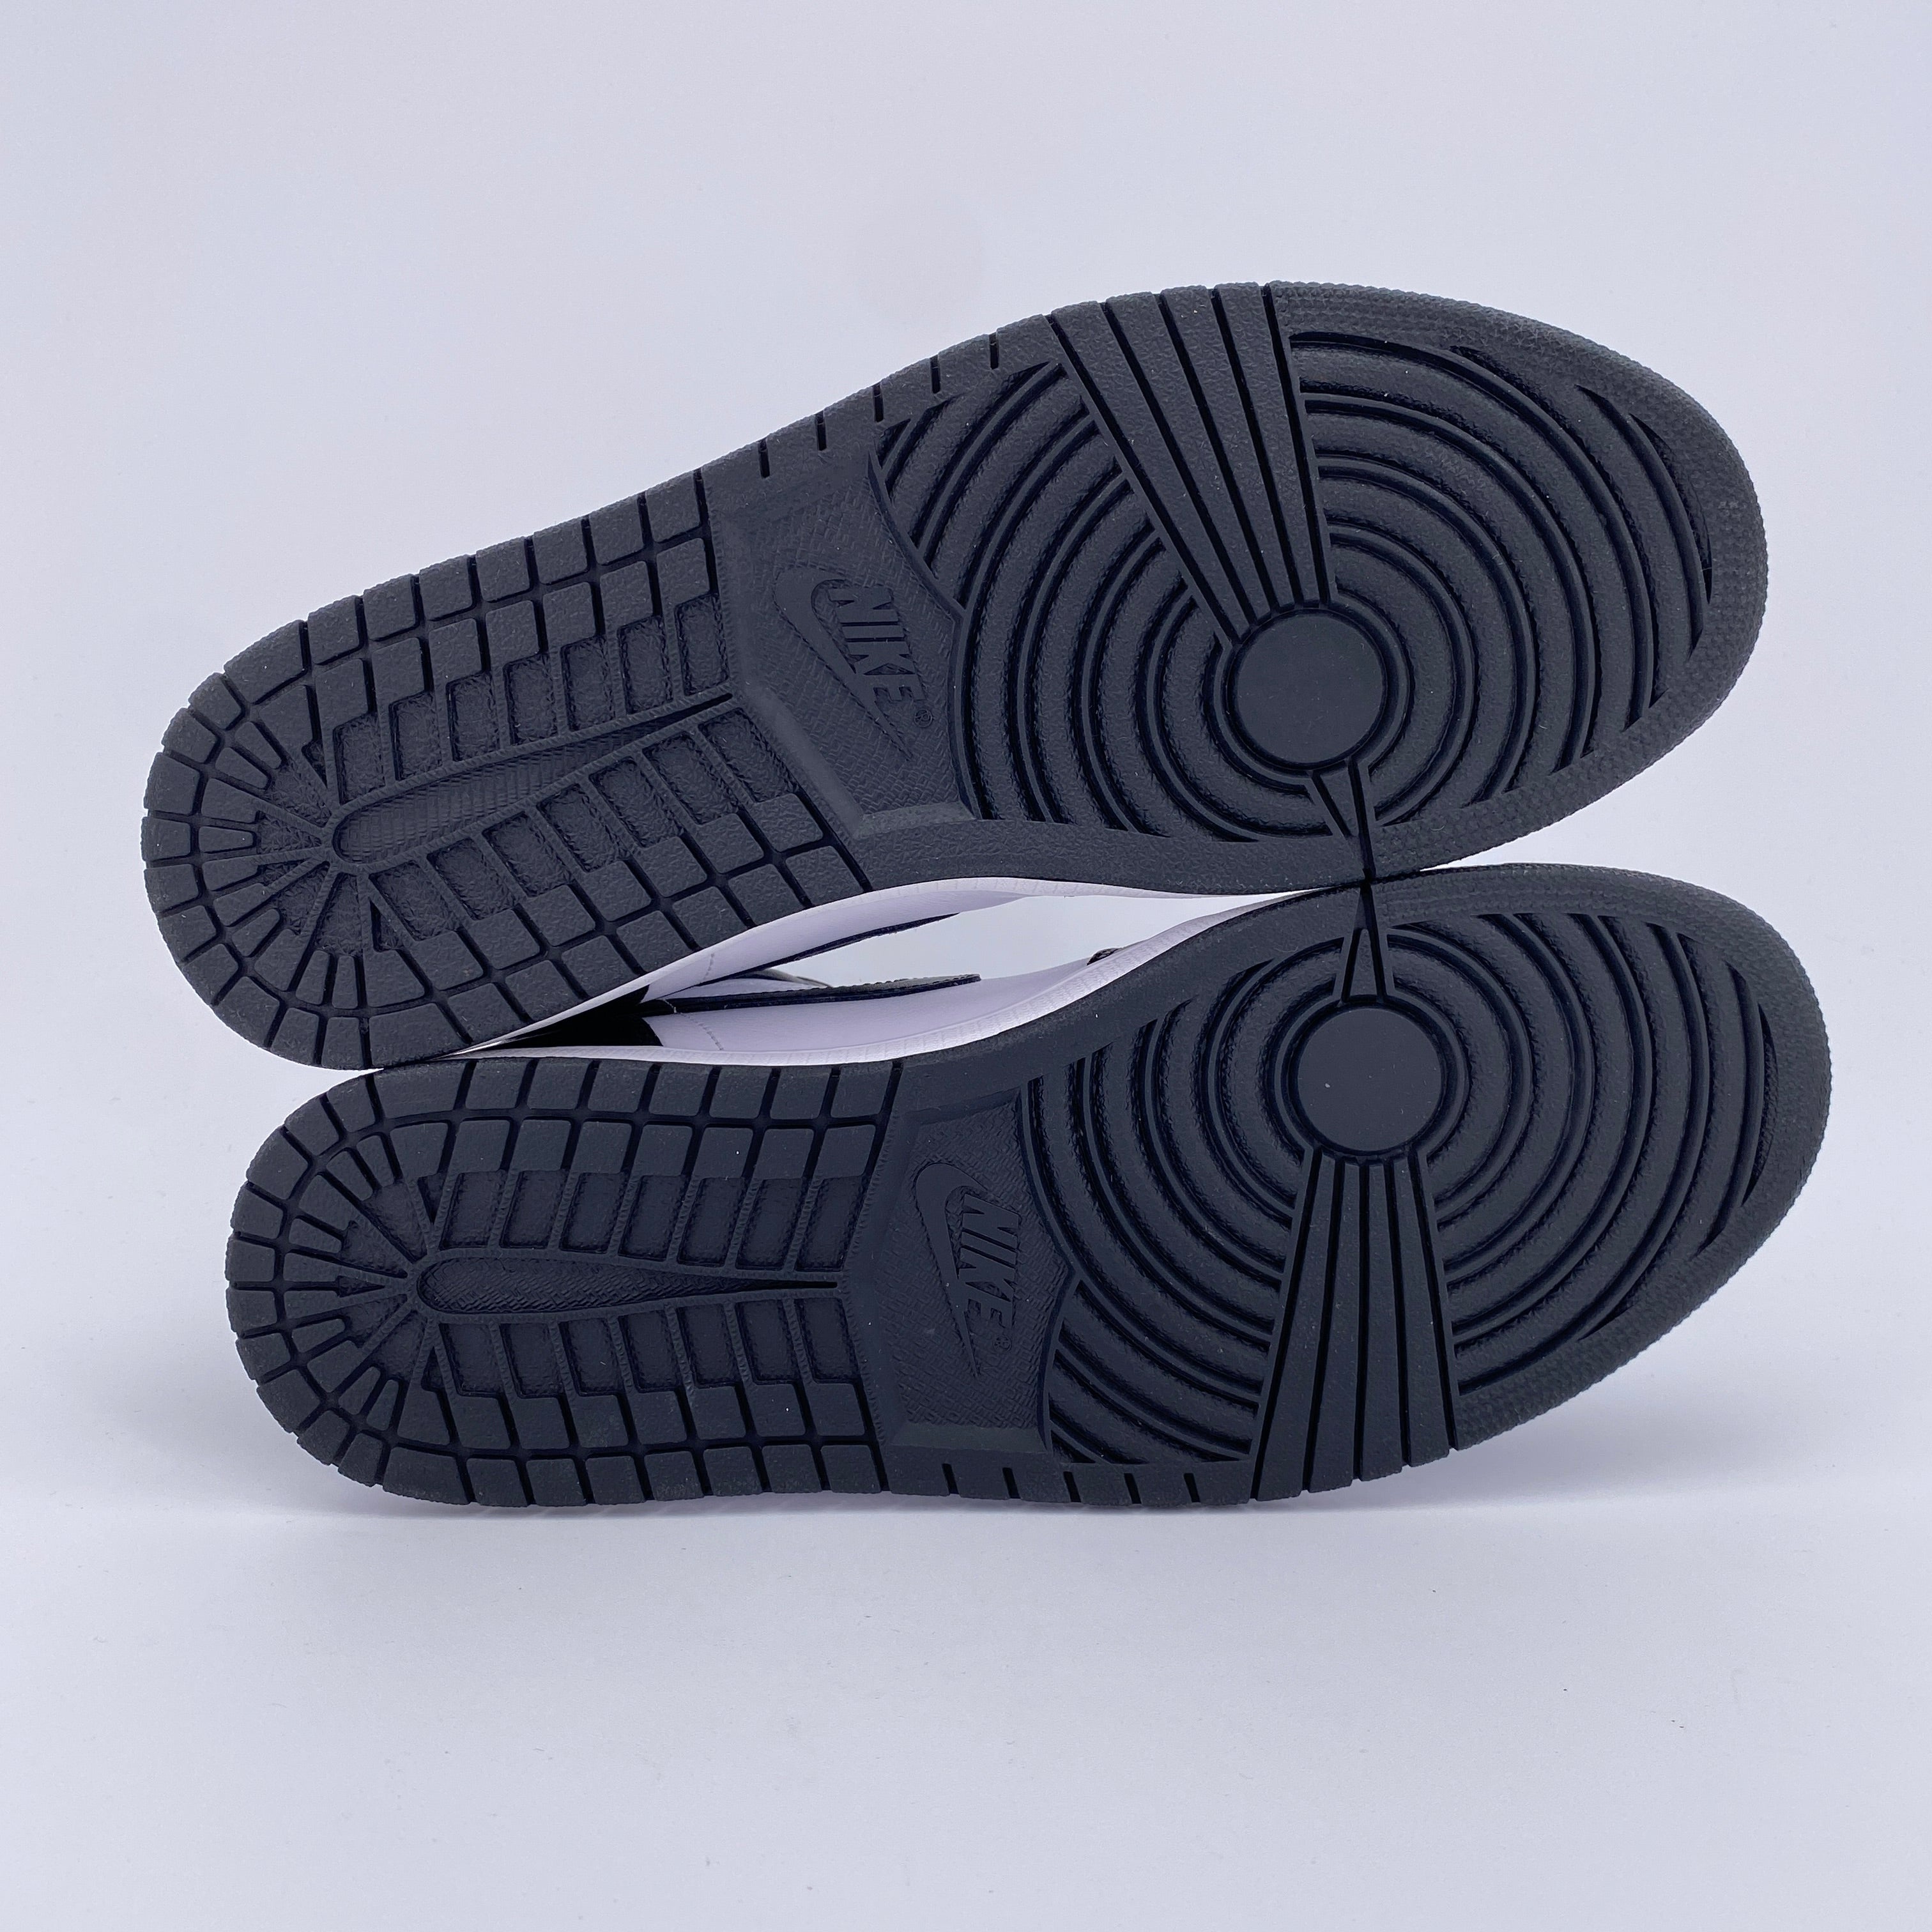 Air Jordan 1 Retro High OG &quot;Black White&quot; 2014 Used Size 11.5